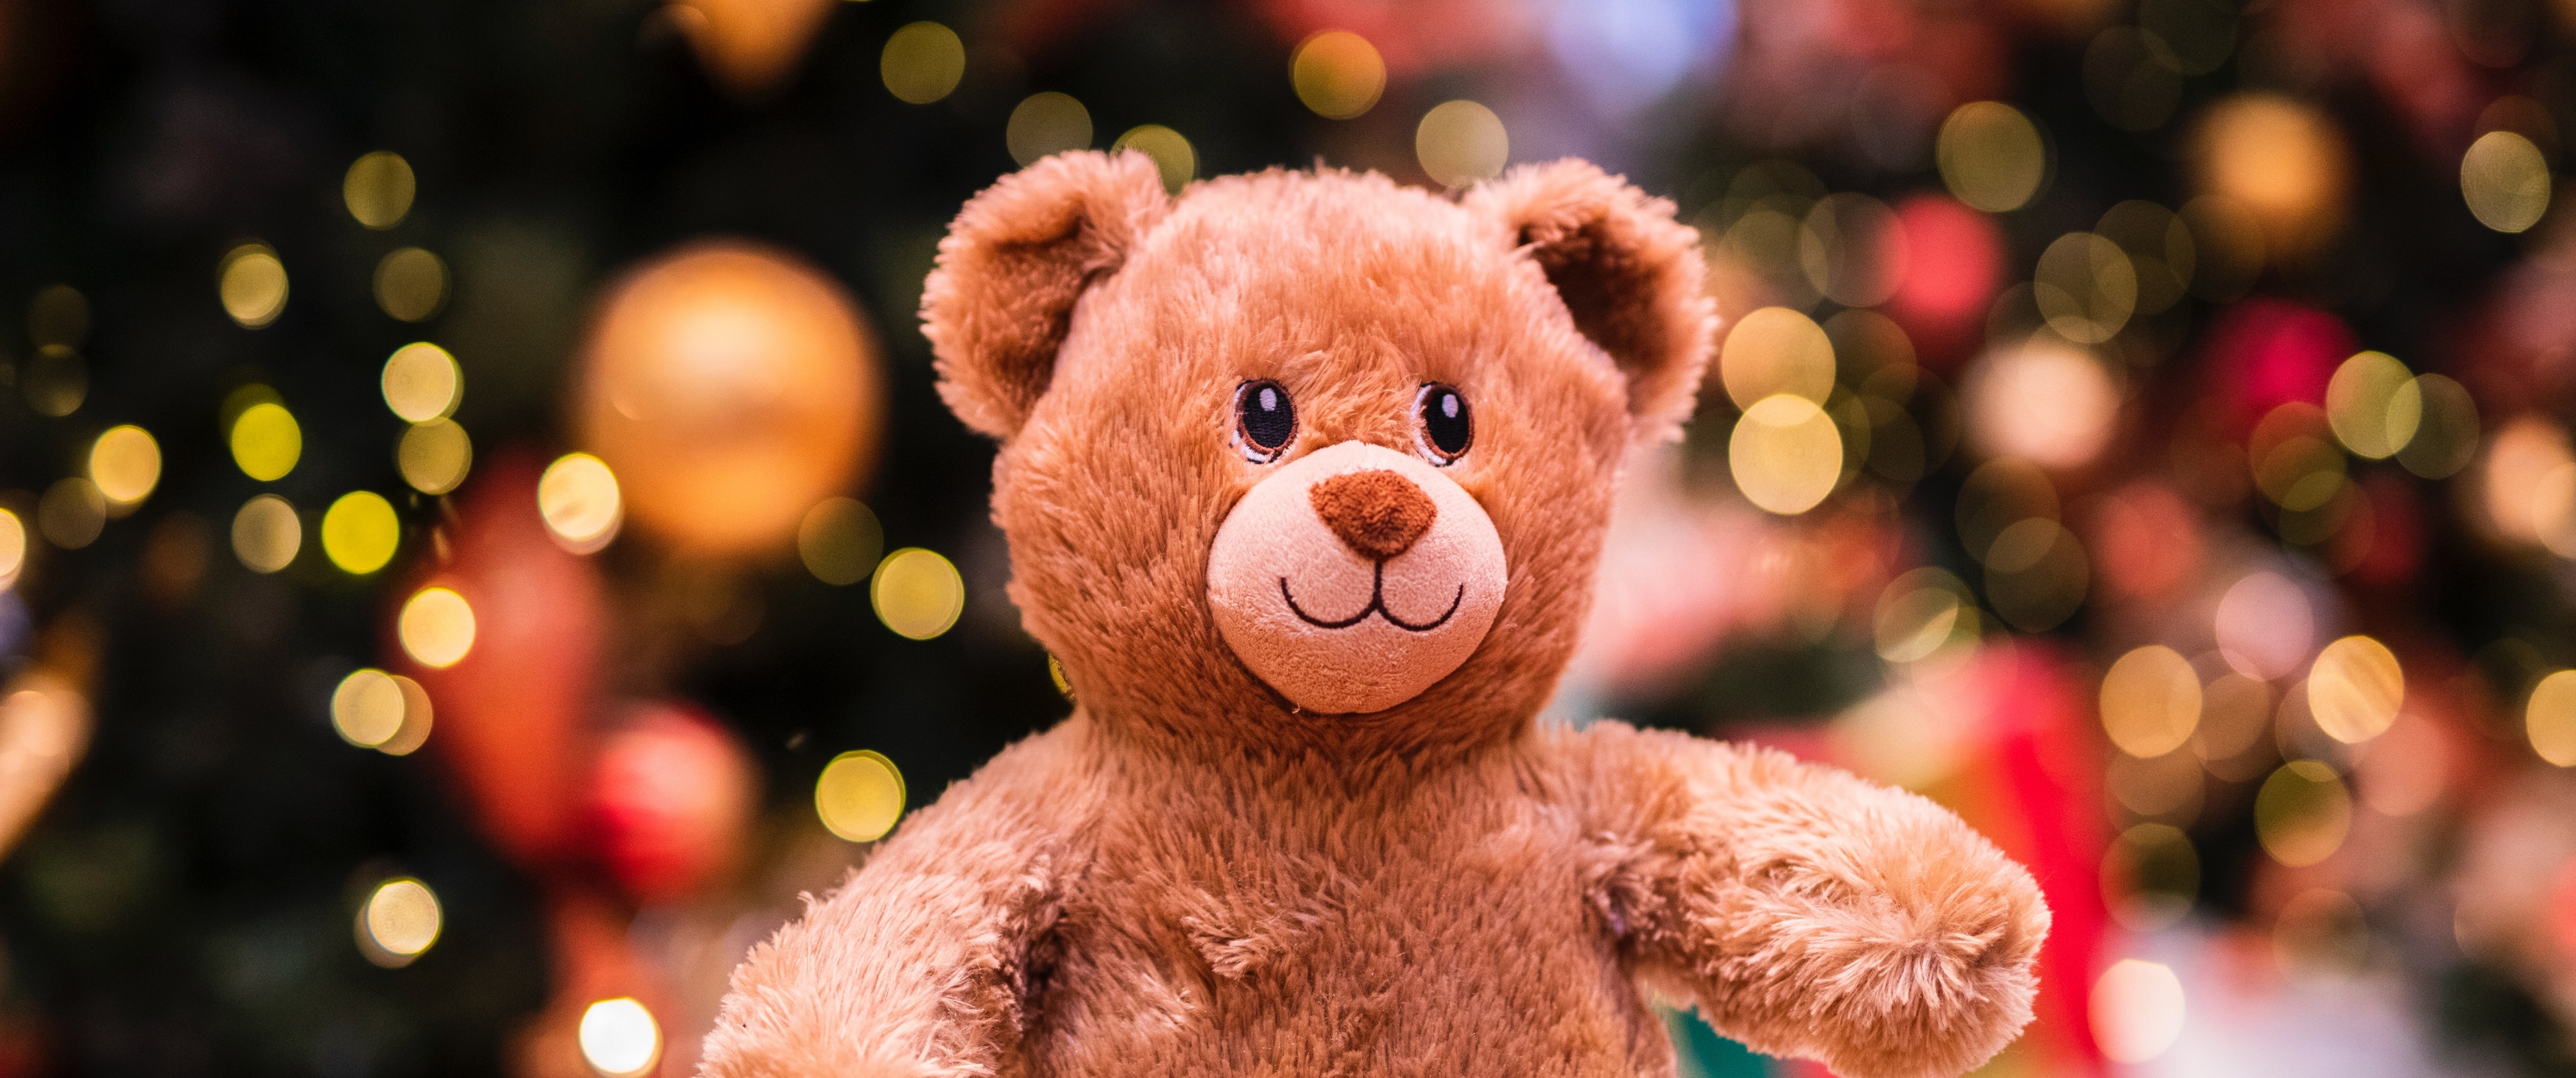 Teddy bear Wallpaper 4K, Cute Christmas